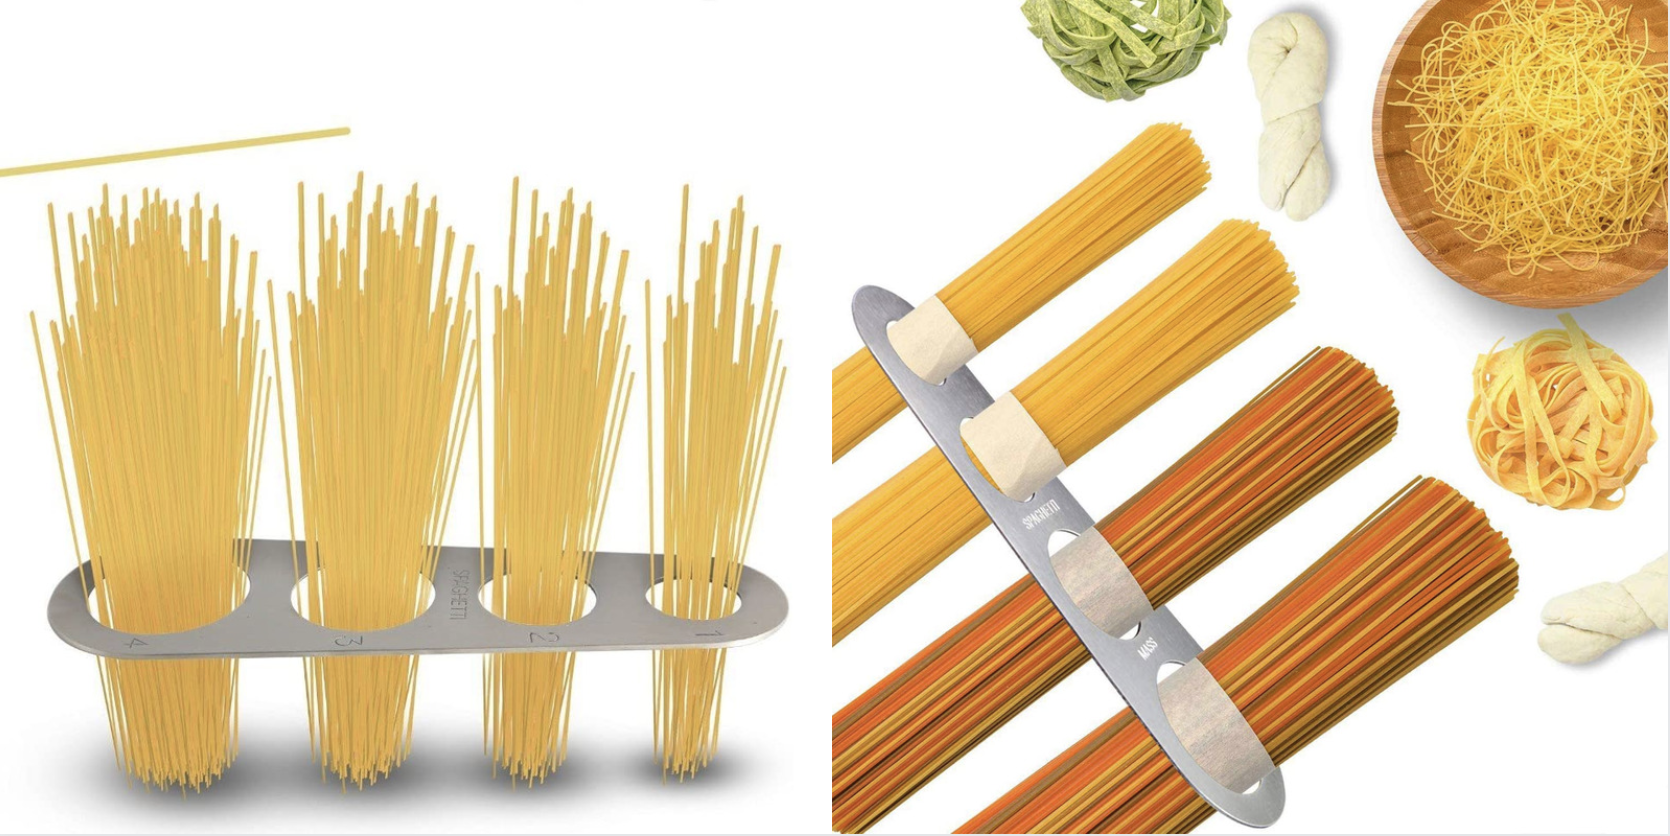 MagiDeal Metal Pasta Measure Tool Italian Spaghetti Servings 4 Portion Guide Control